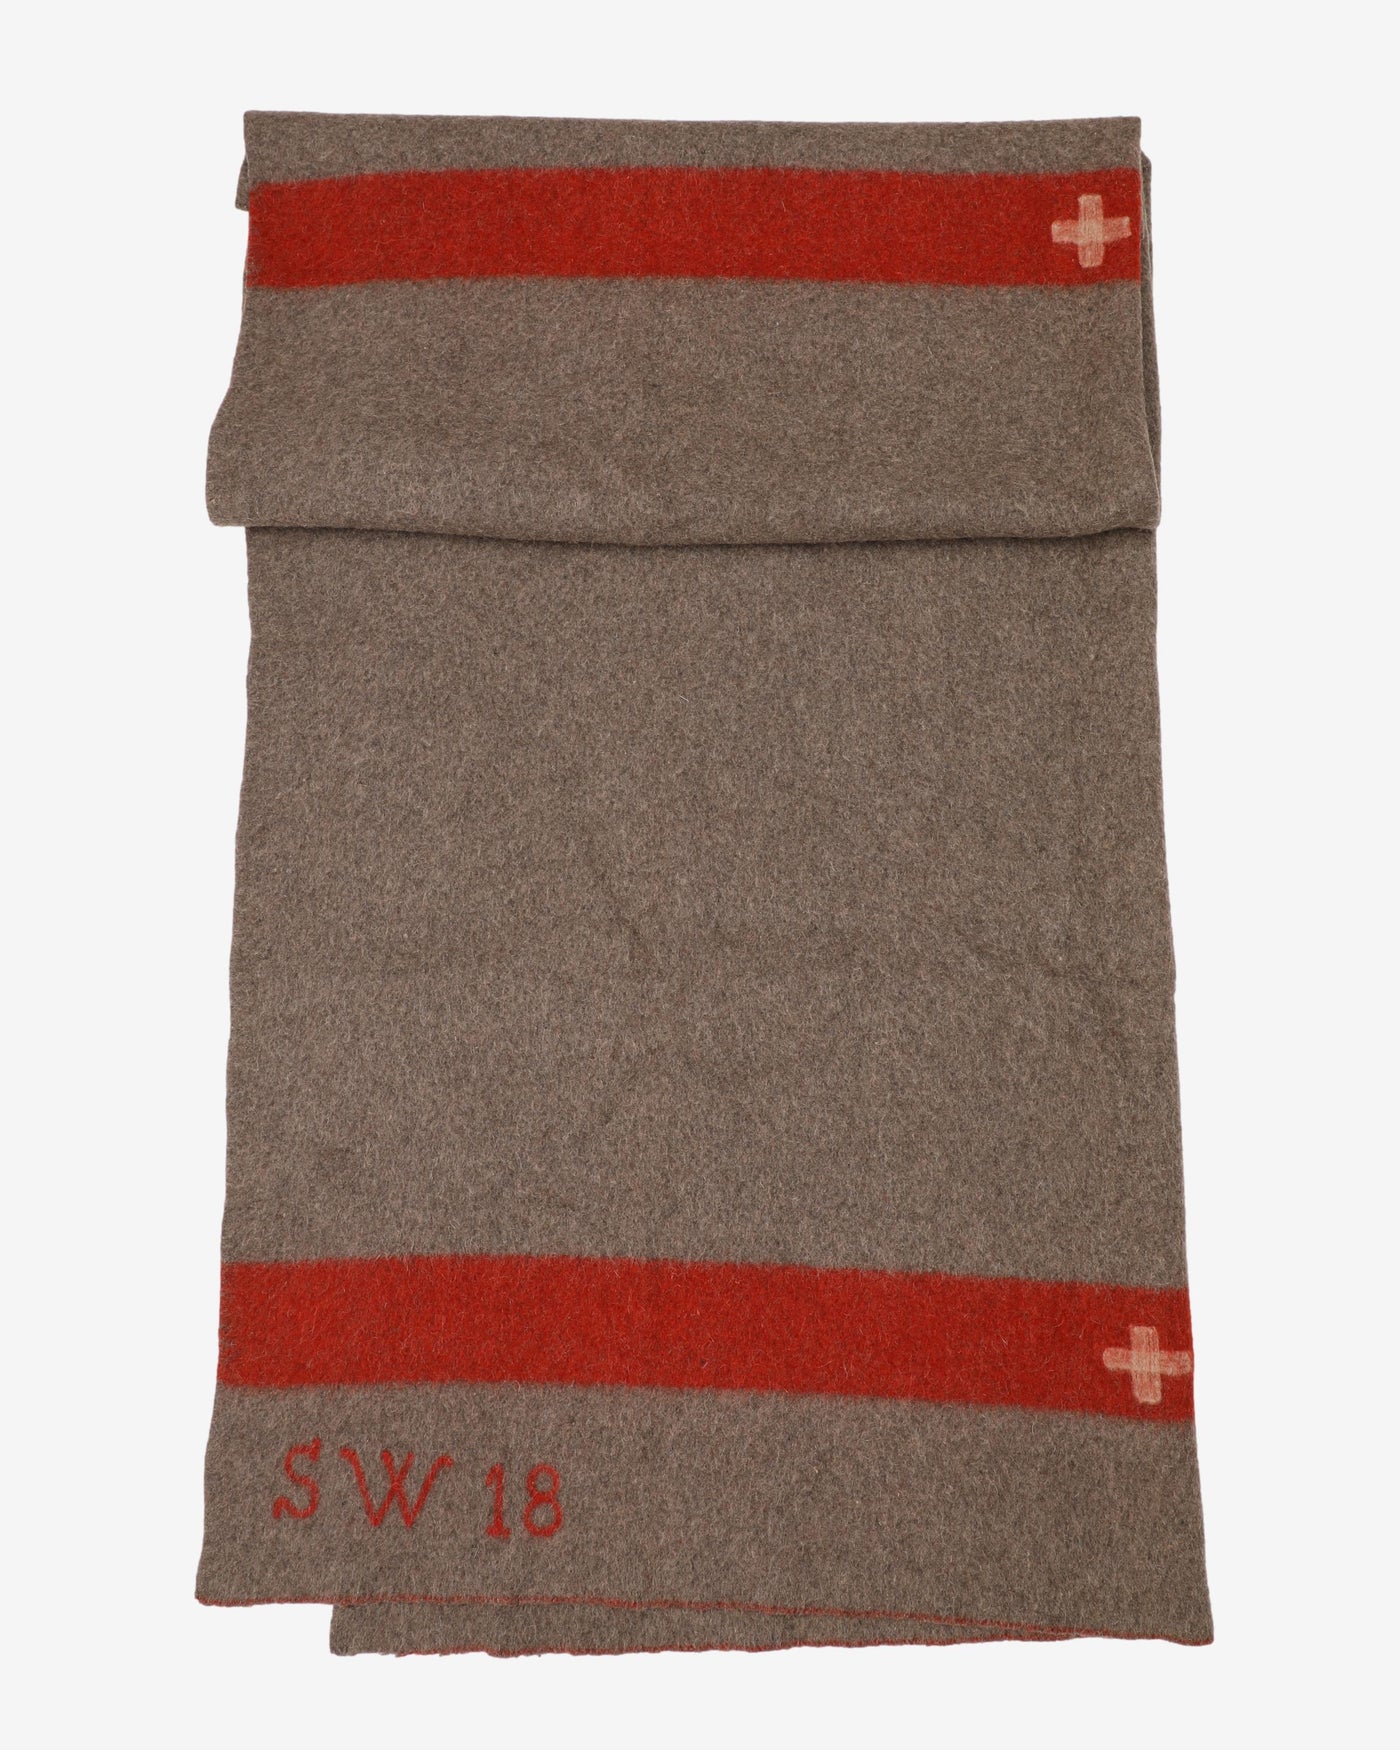 1918 Swiss Army Wool Blanket